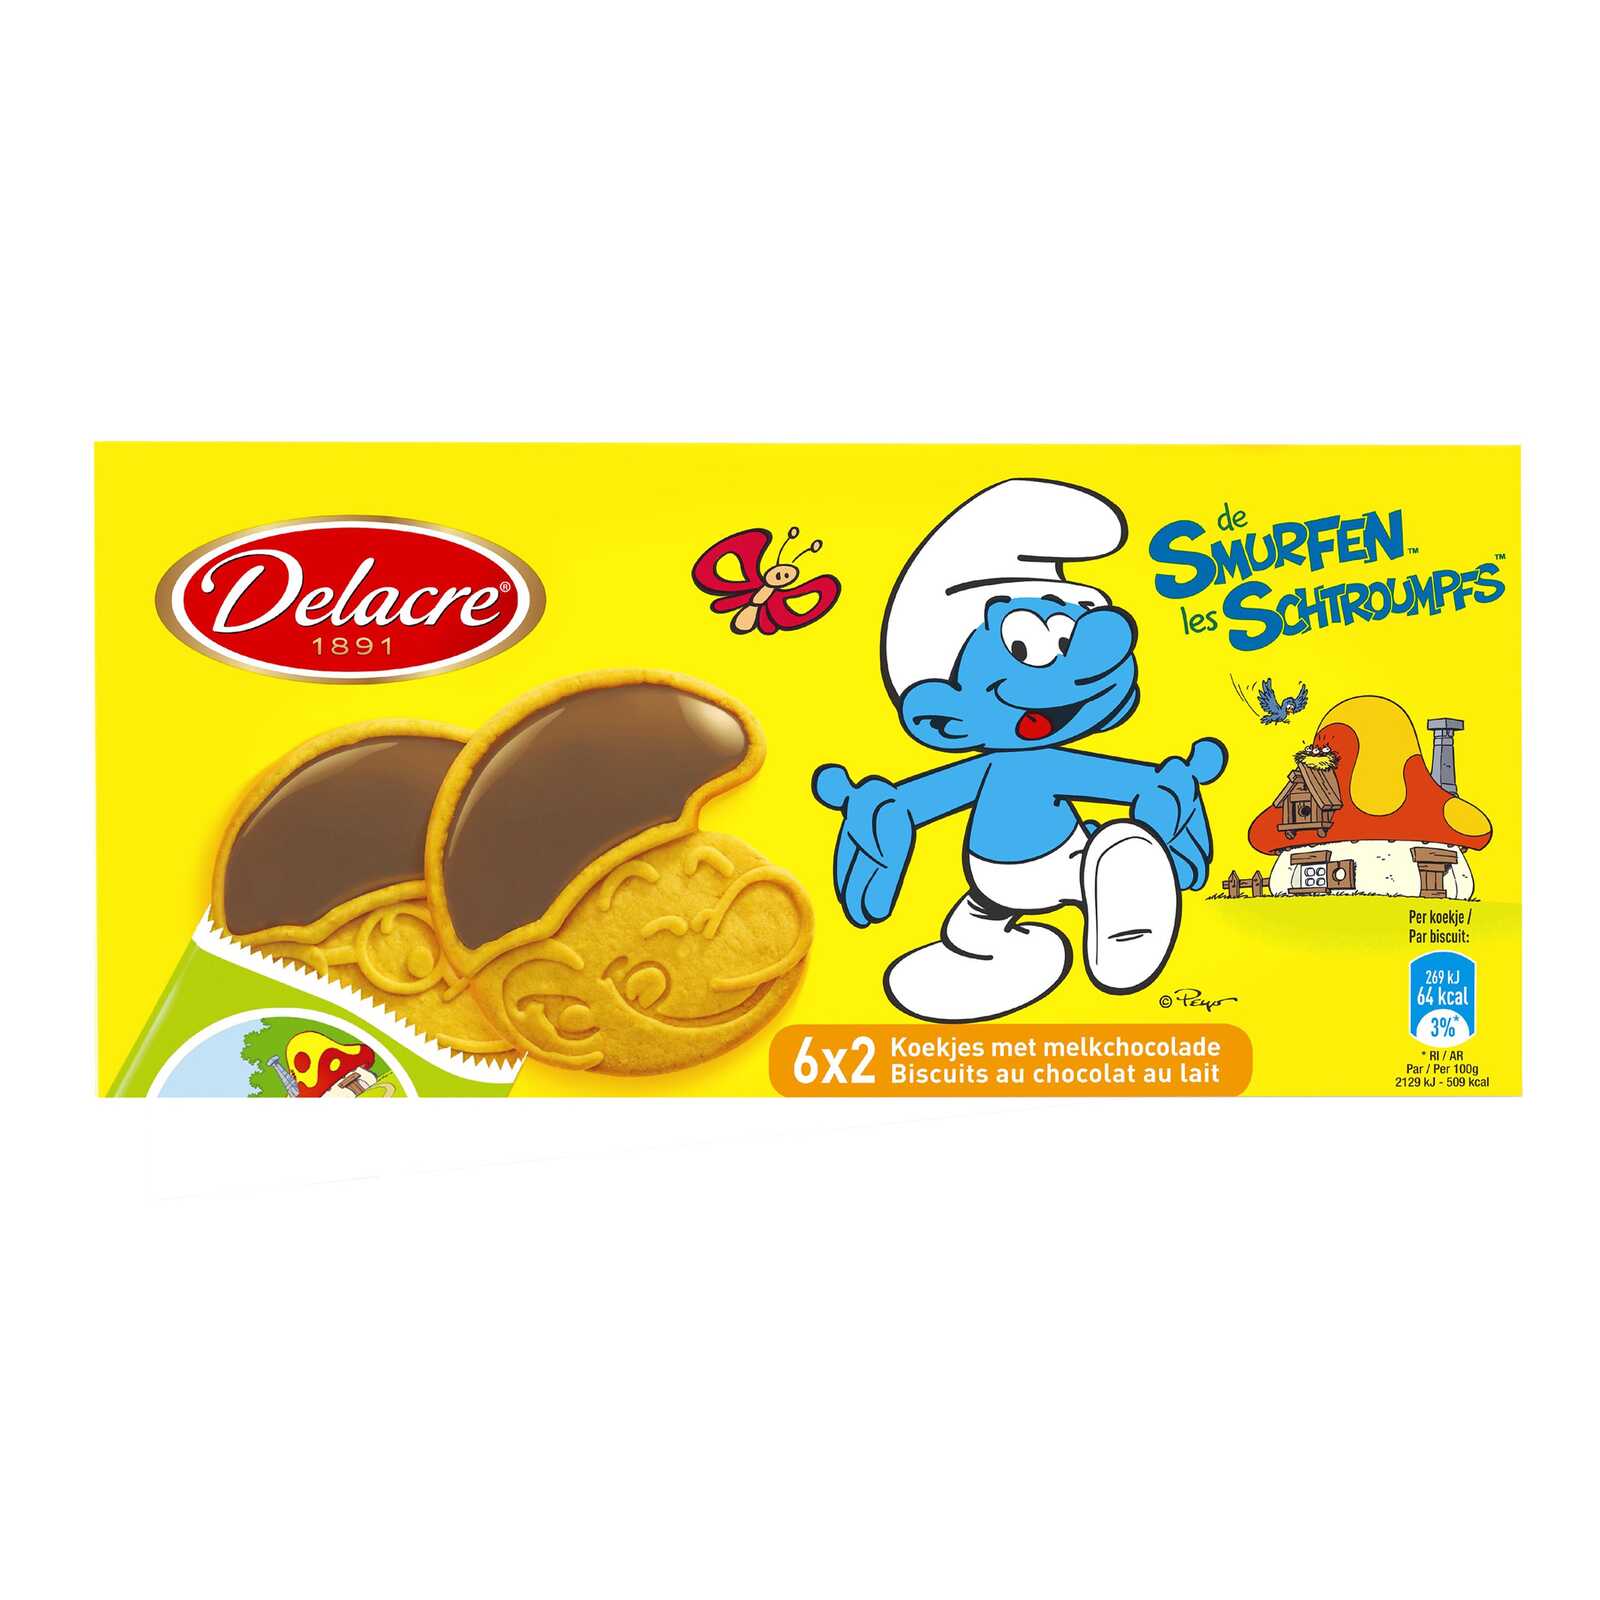 Delacre Cookies, The Smurfs Cookies With Milk Chocolate 6 Pieces 2 Cookies, Delacre Biscuits, Delacre Belgian Cookies